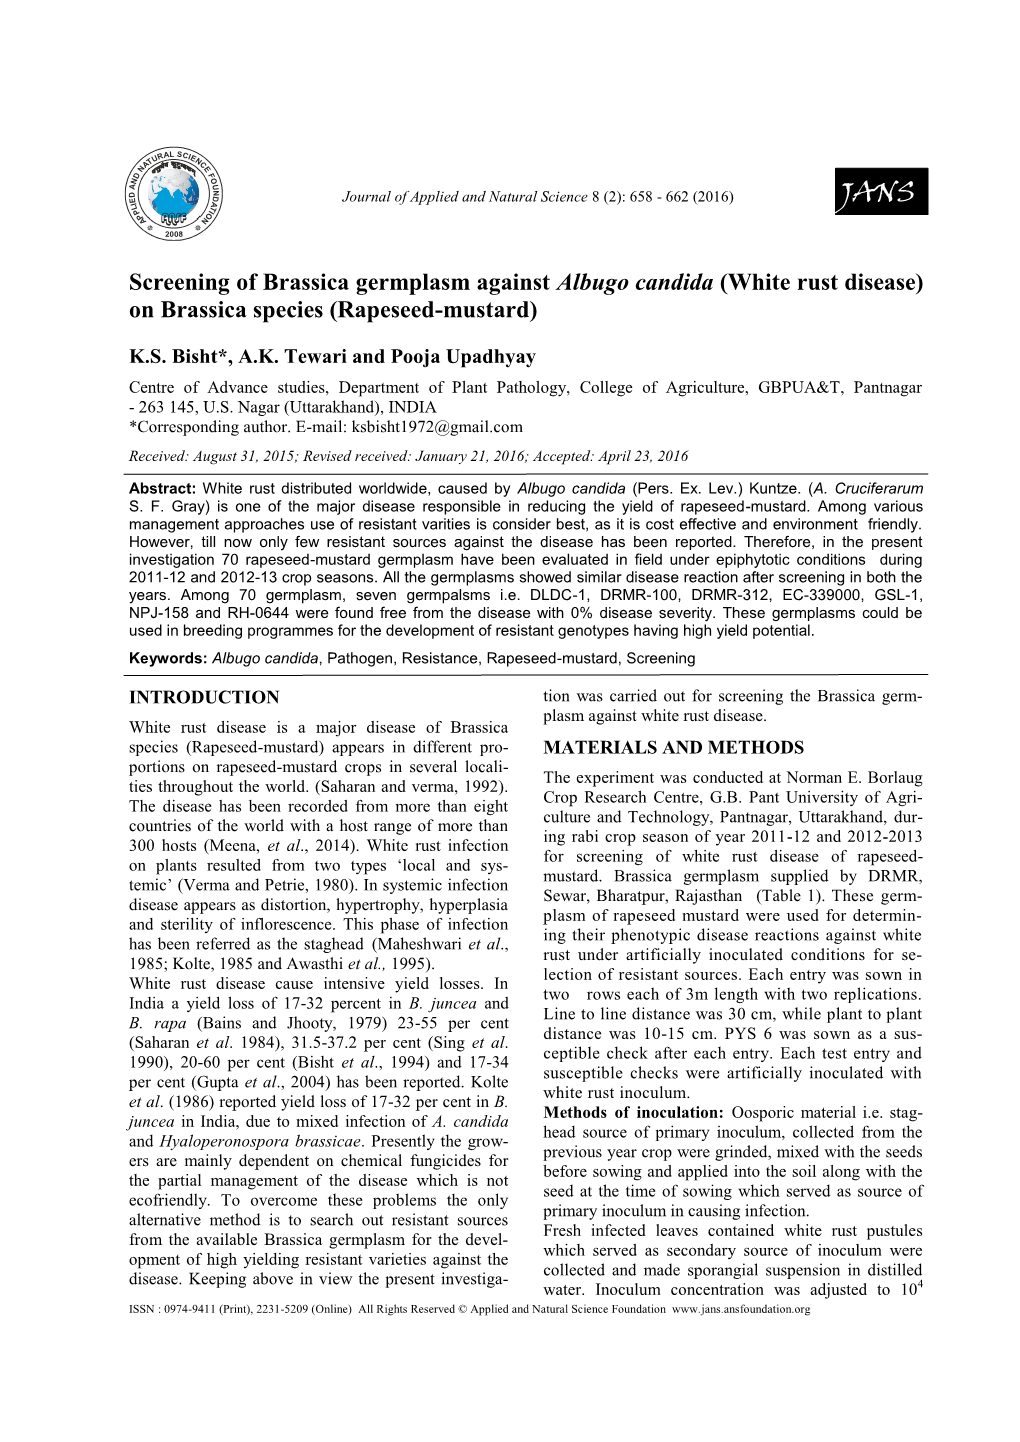 Screening of Brassica Germplasm Against Albugo Candida (White Rust Disease) on Brassica Species (Rapeseed-Mustard)